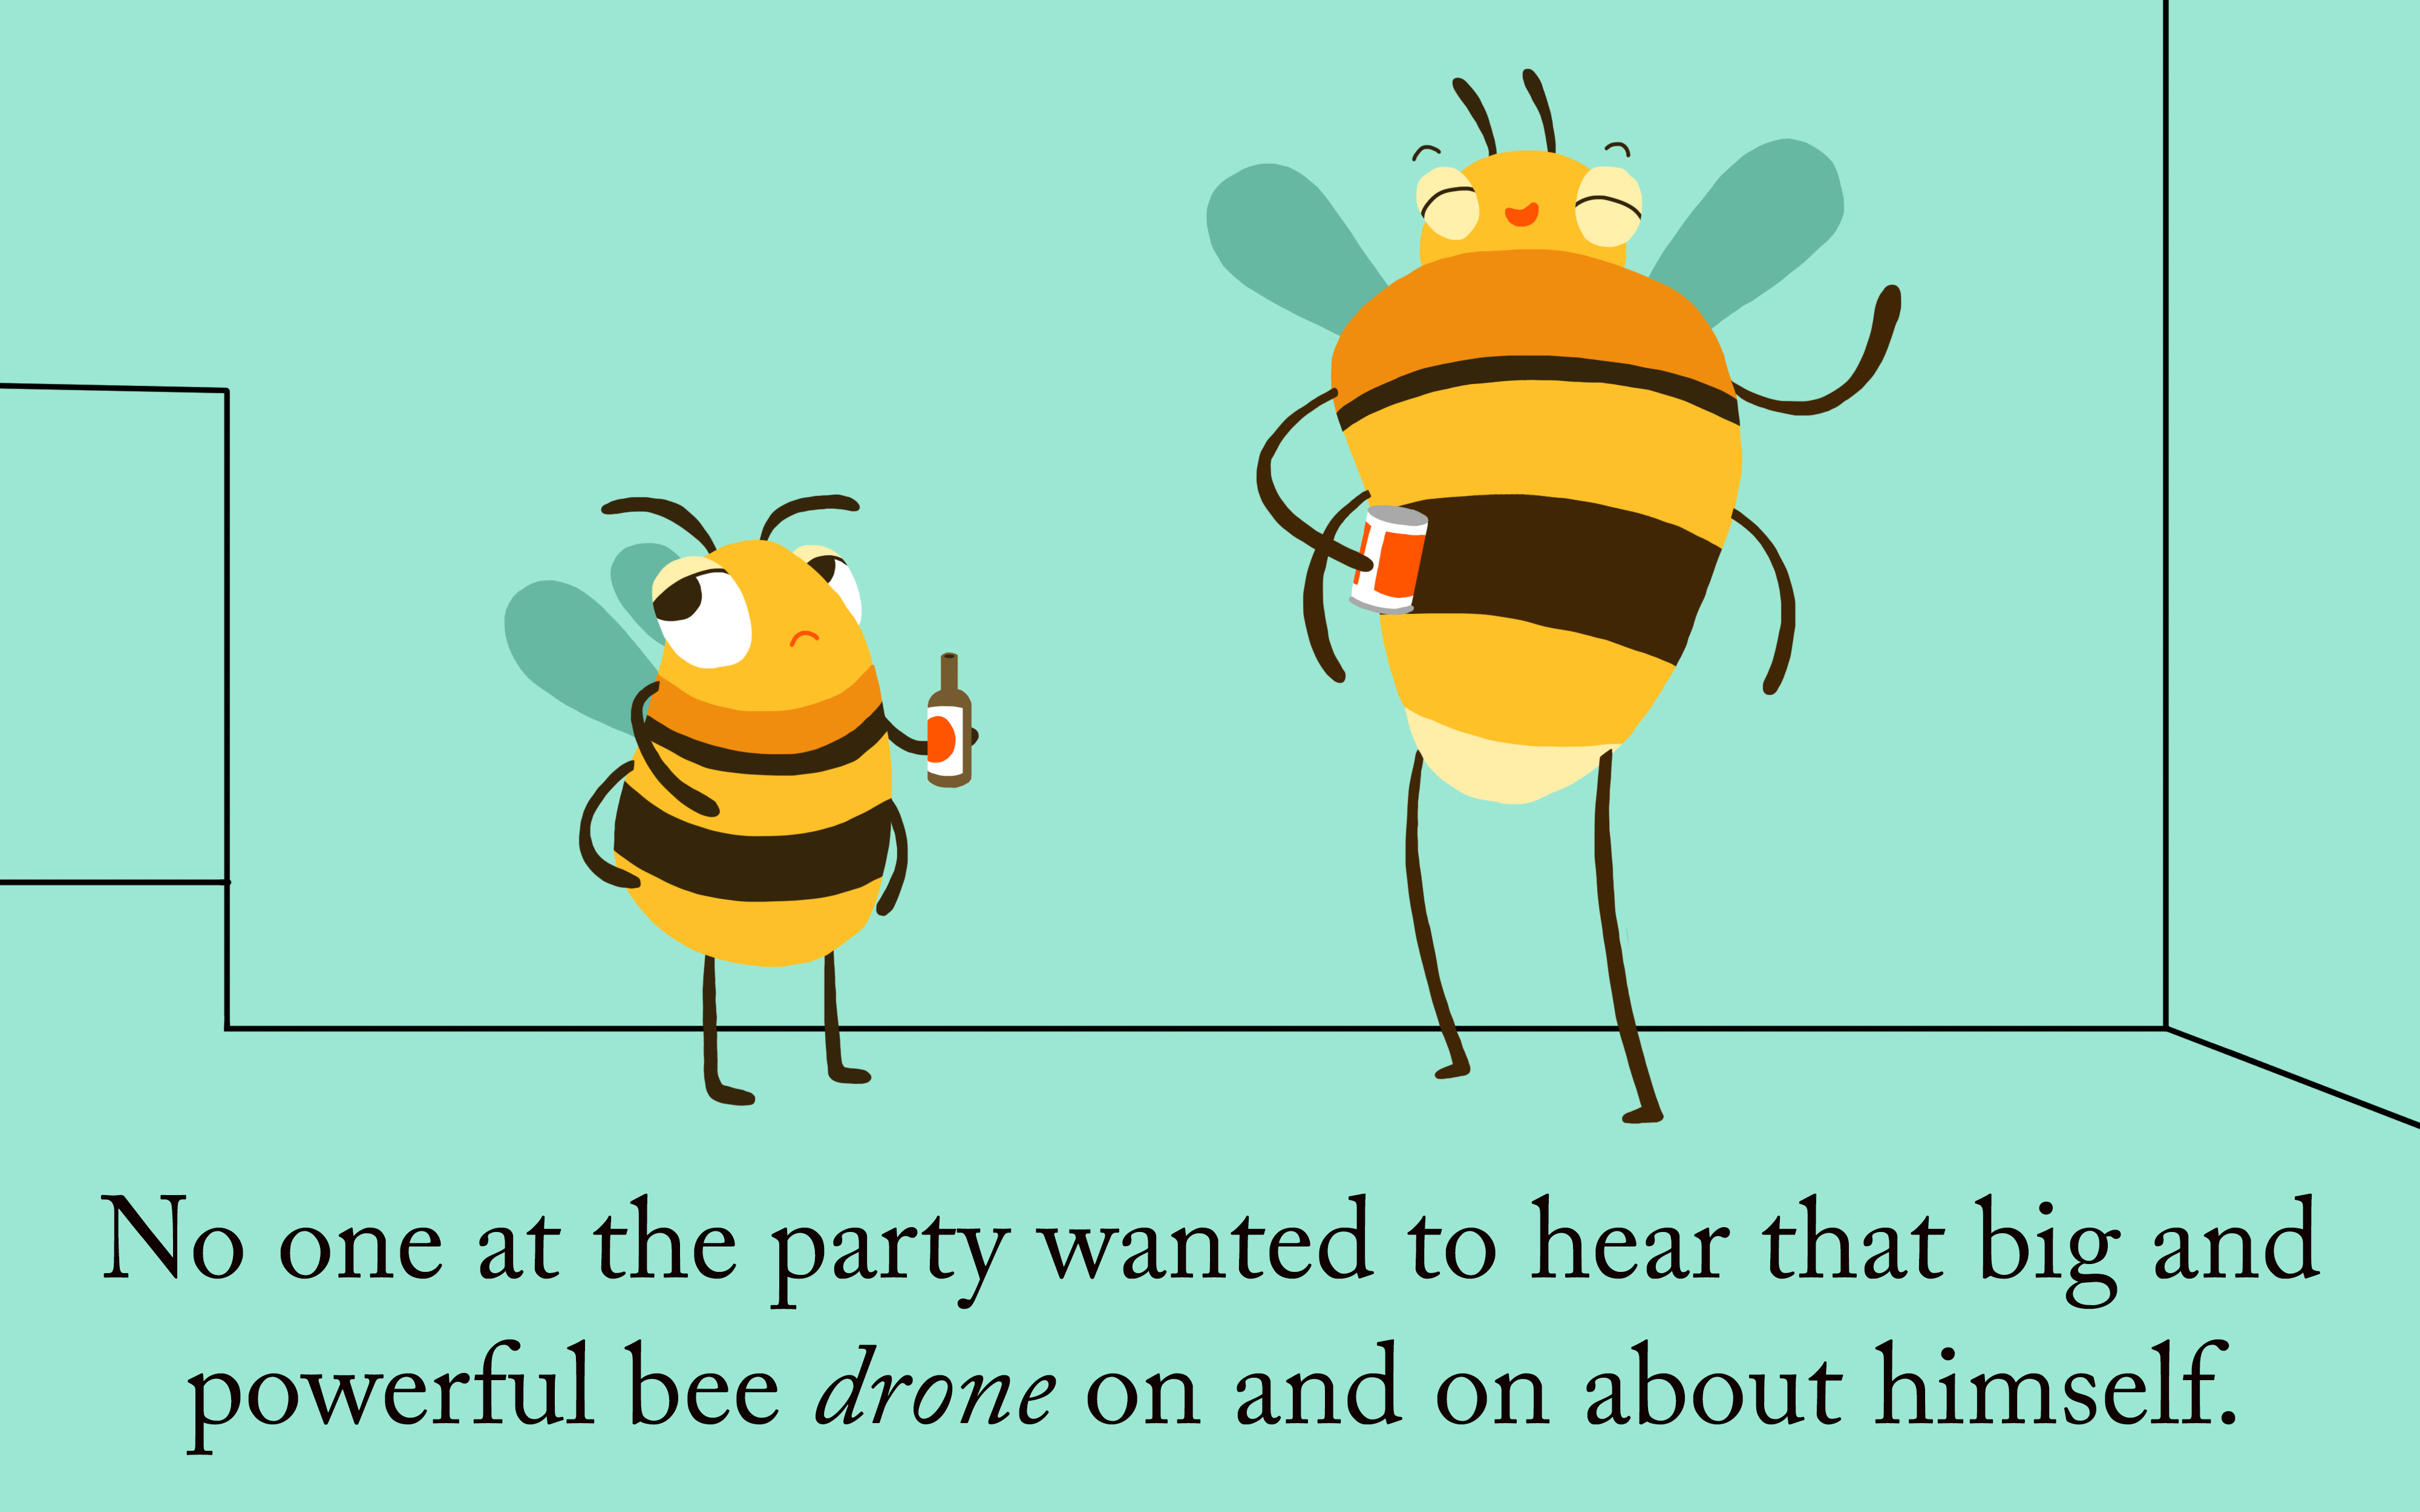 best bee puns